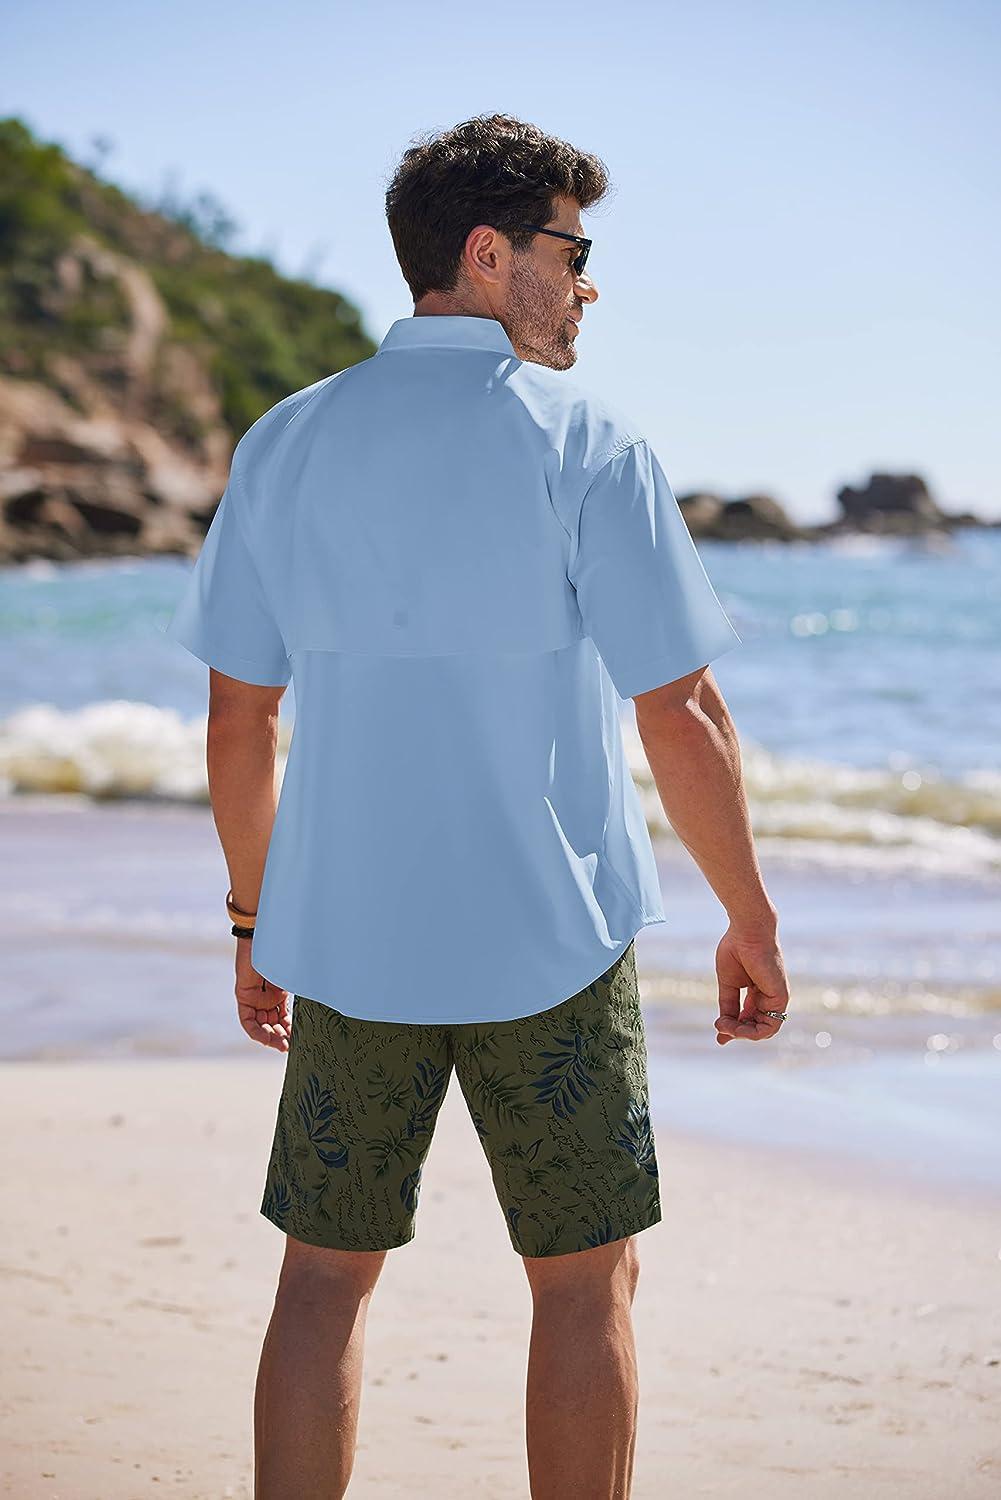 COOFADNY Men's Fishing Shirt Performance Waterproof Dry SPF Hiking